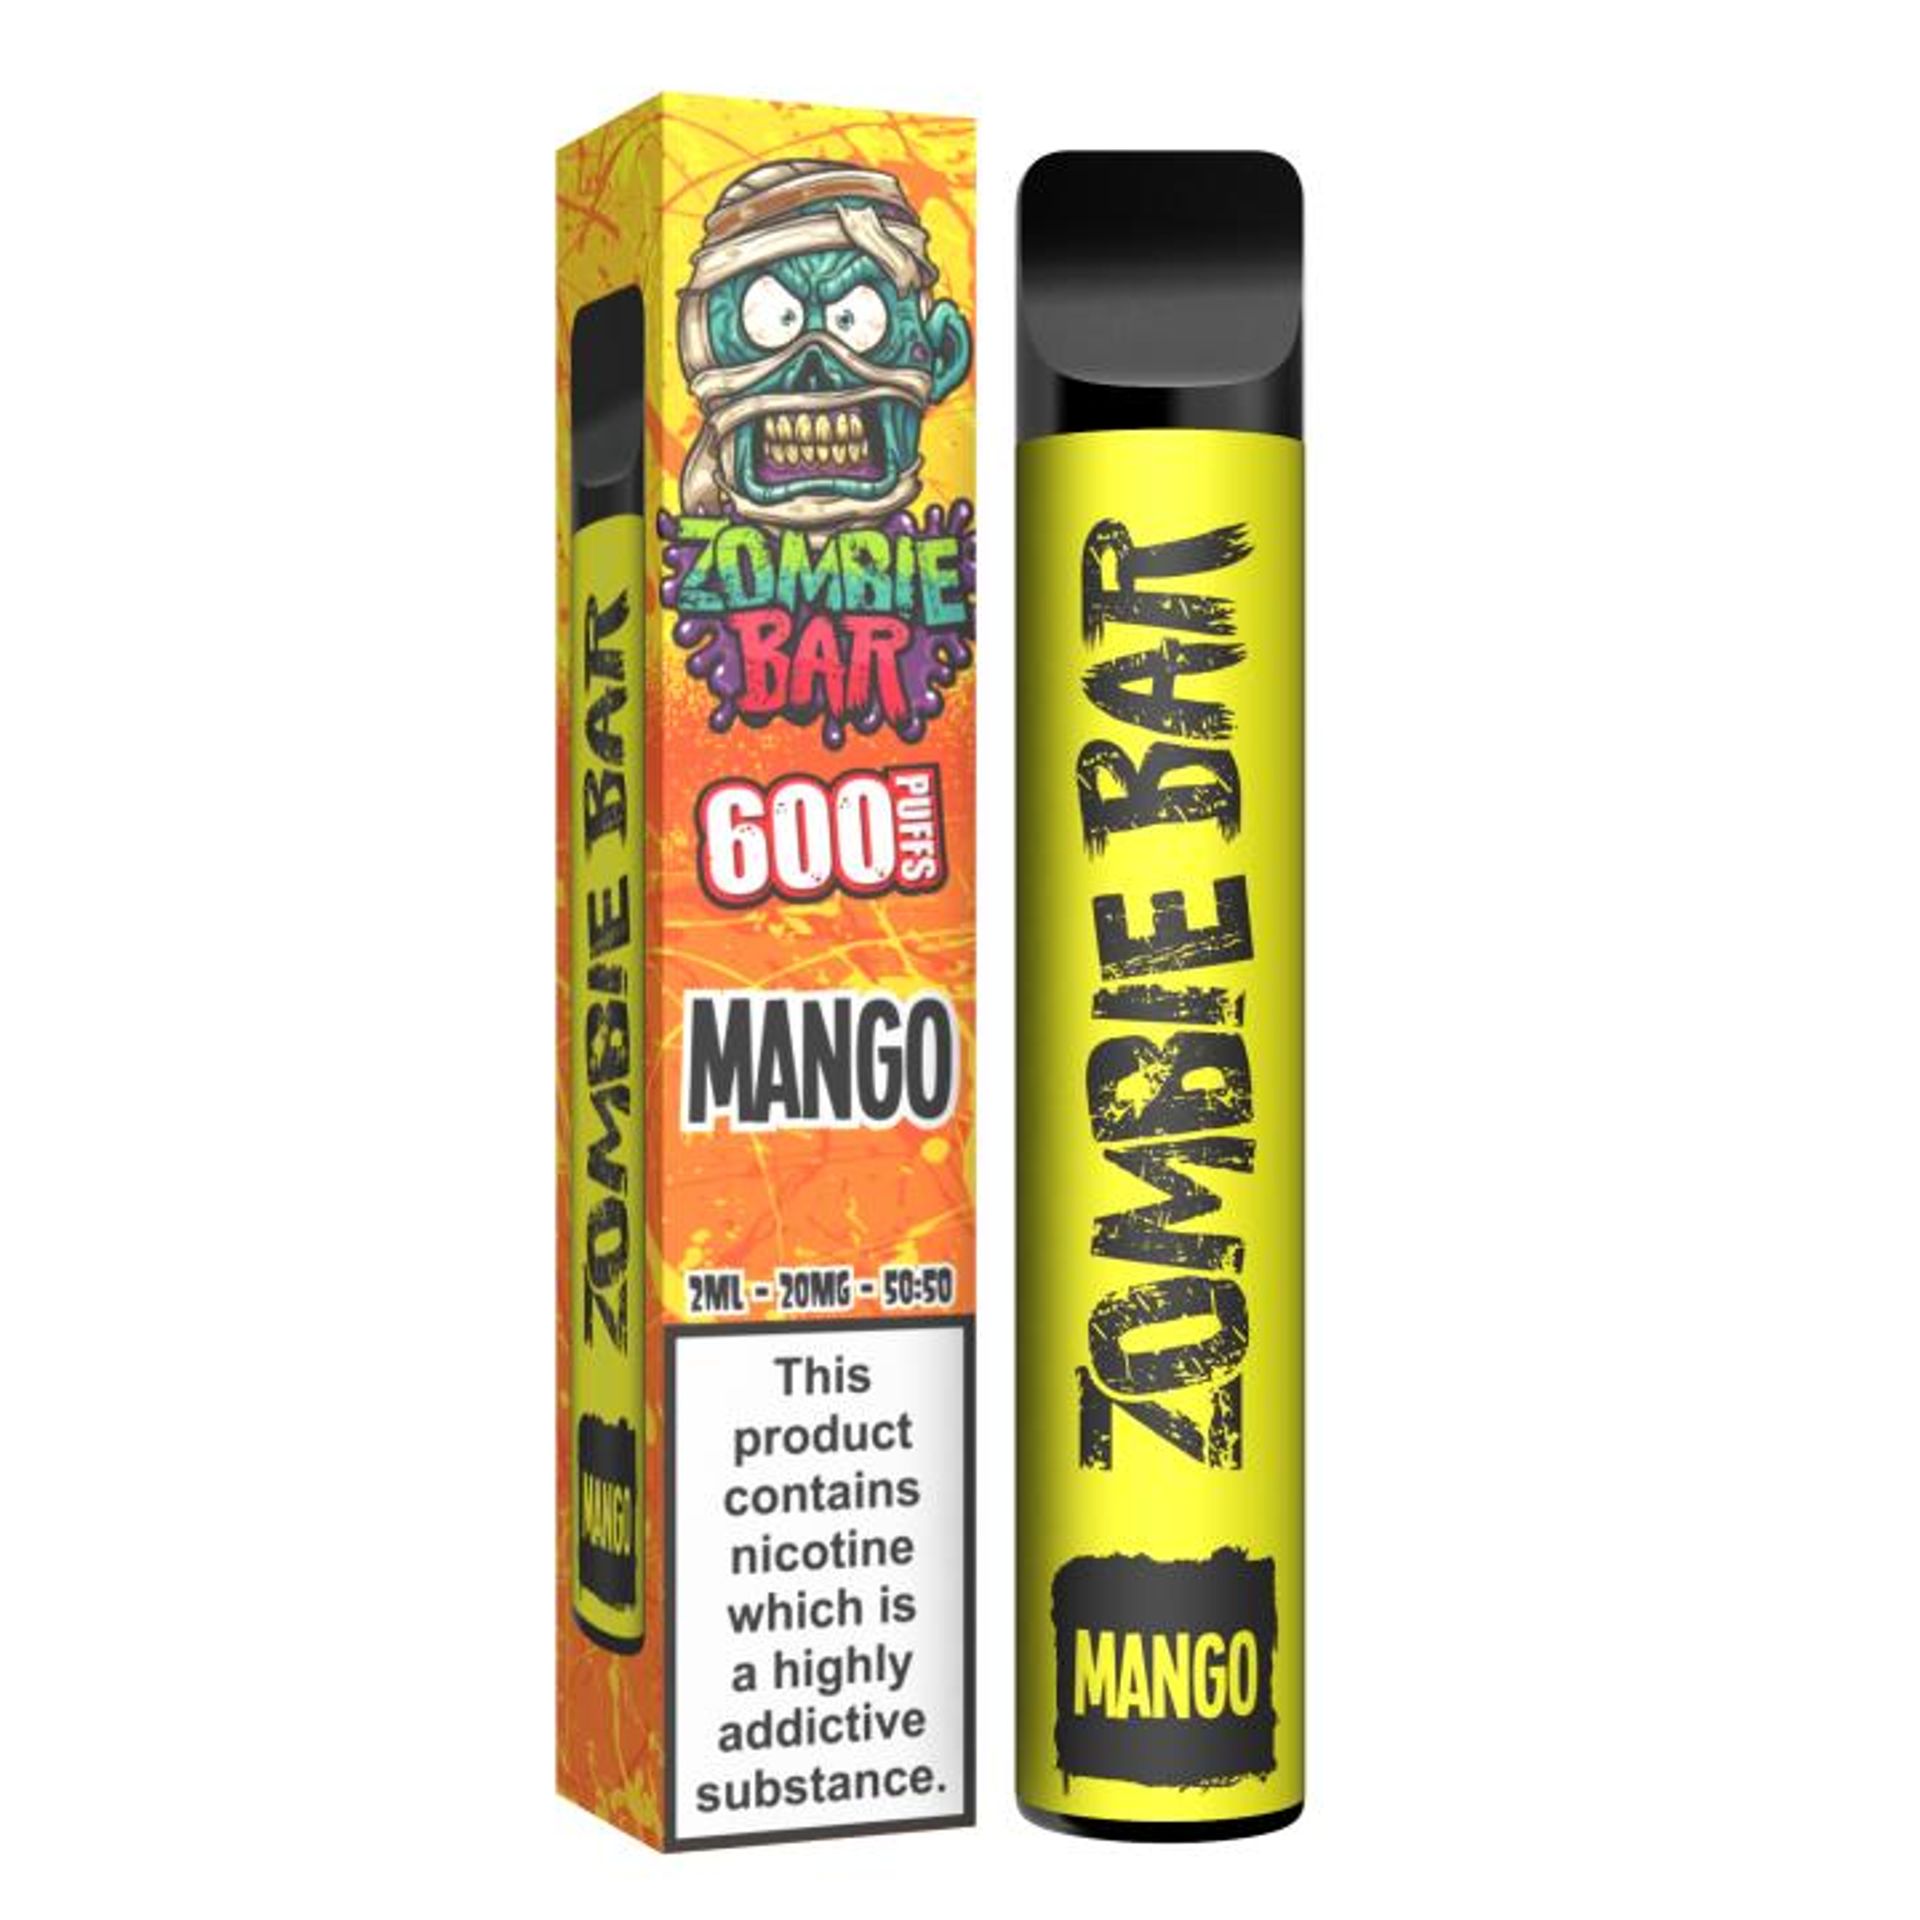 Image of Mango by Zombie Bar